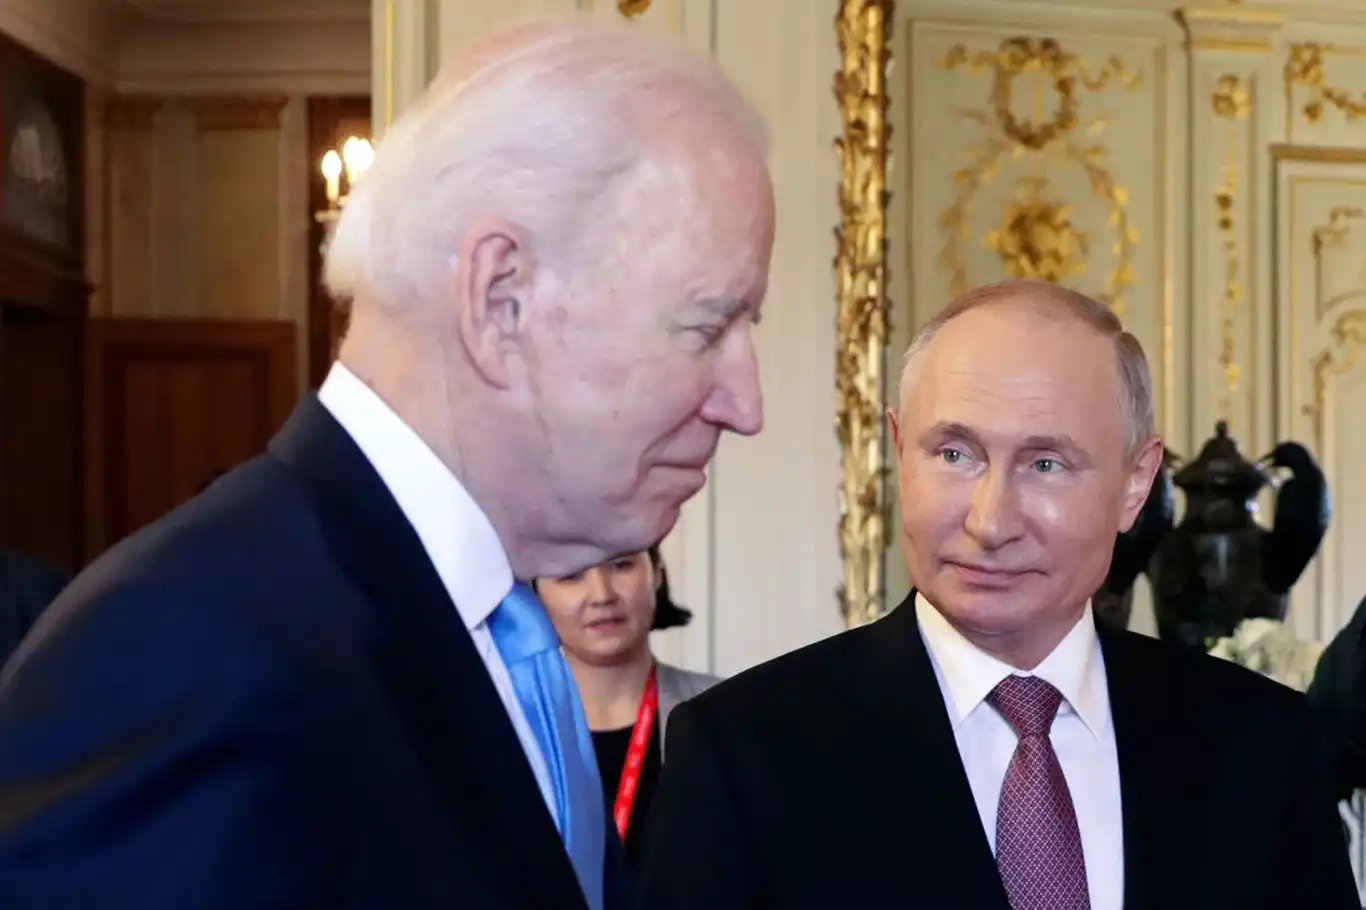 Russia criticizes U.S. media and political circles following Biden's withdrawal